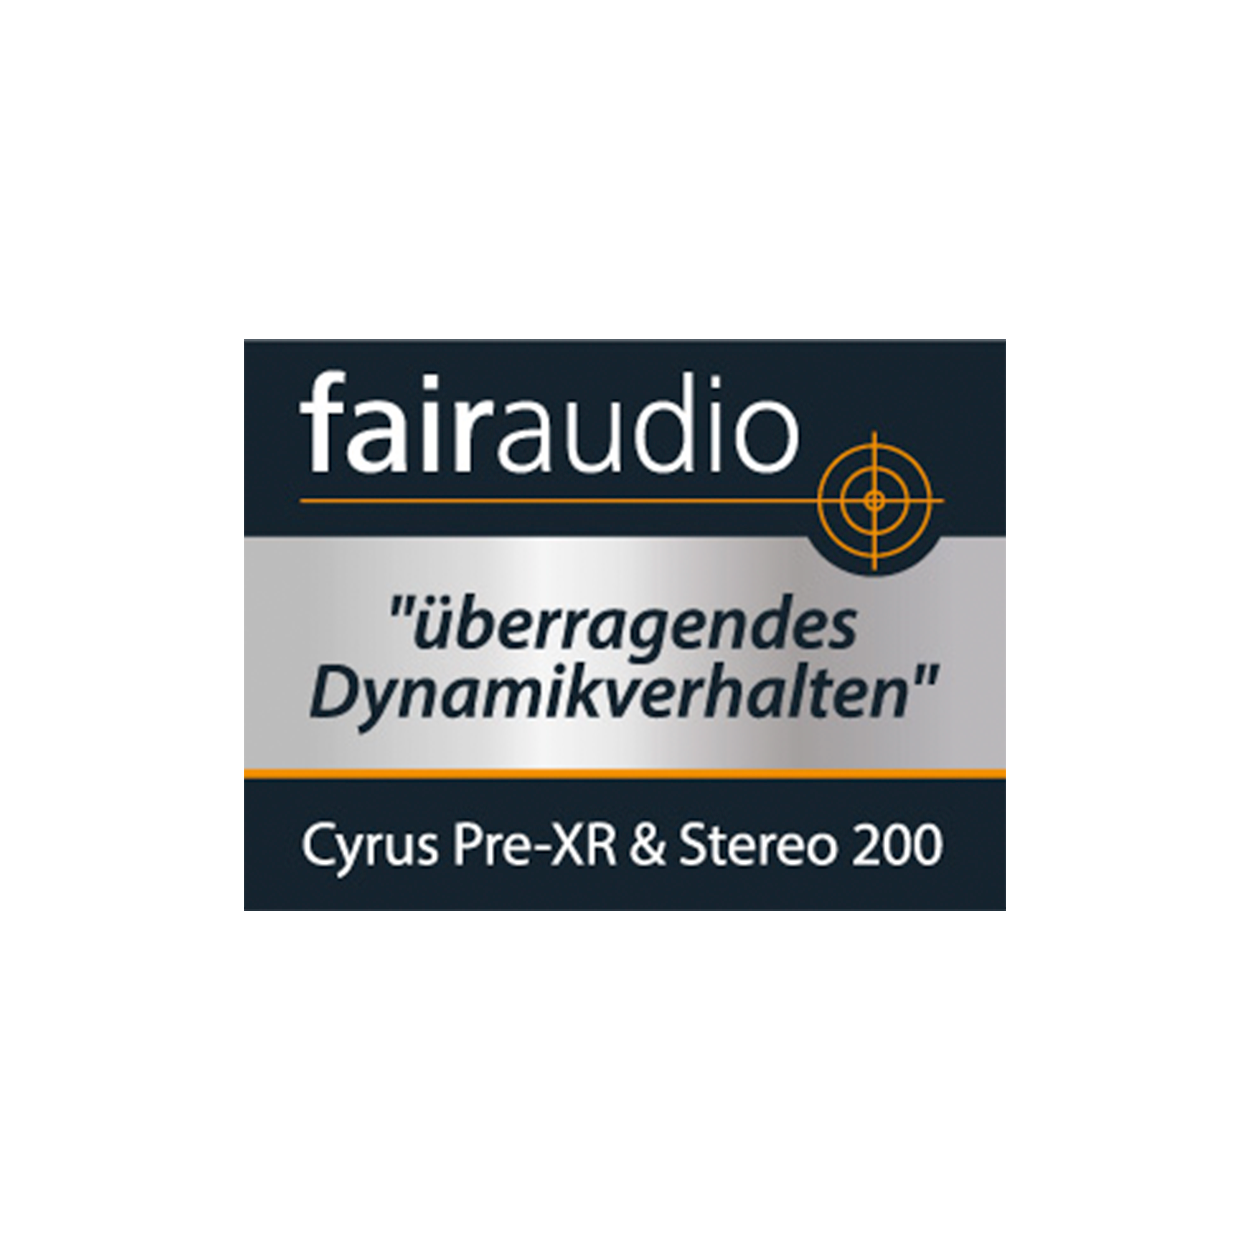 Bild: Bellevue Audio GmbH - Test fairaudio Cyrus Pre-XR & Stereo 200